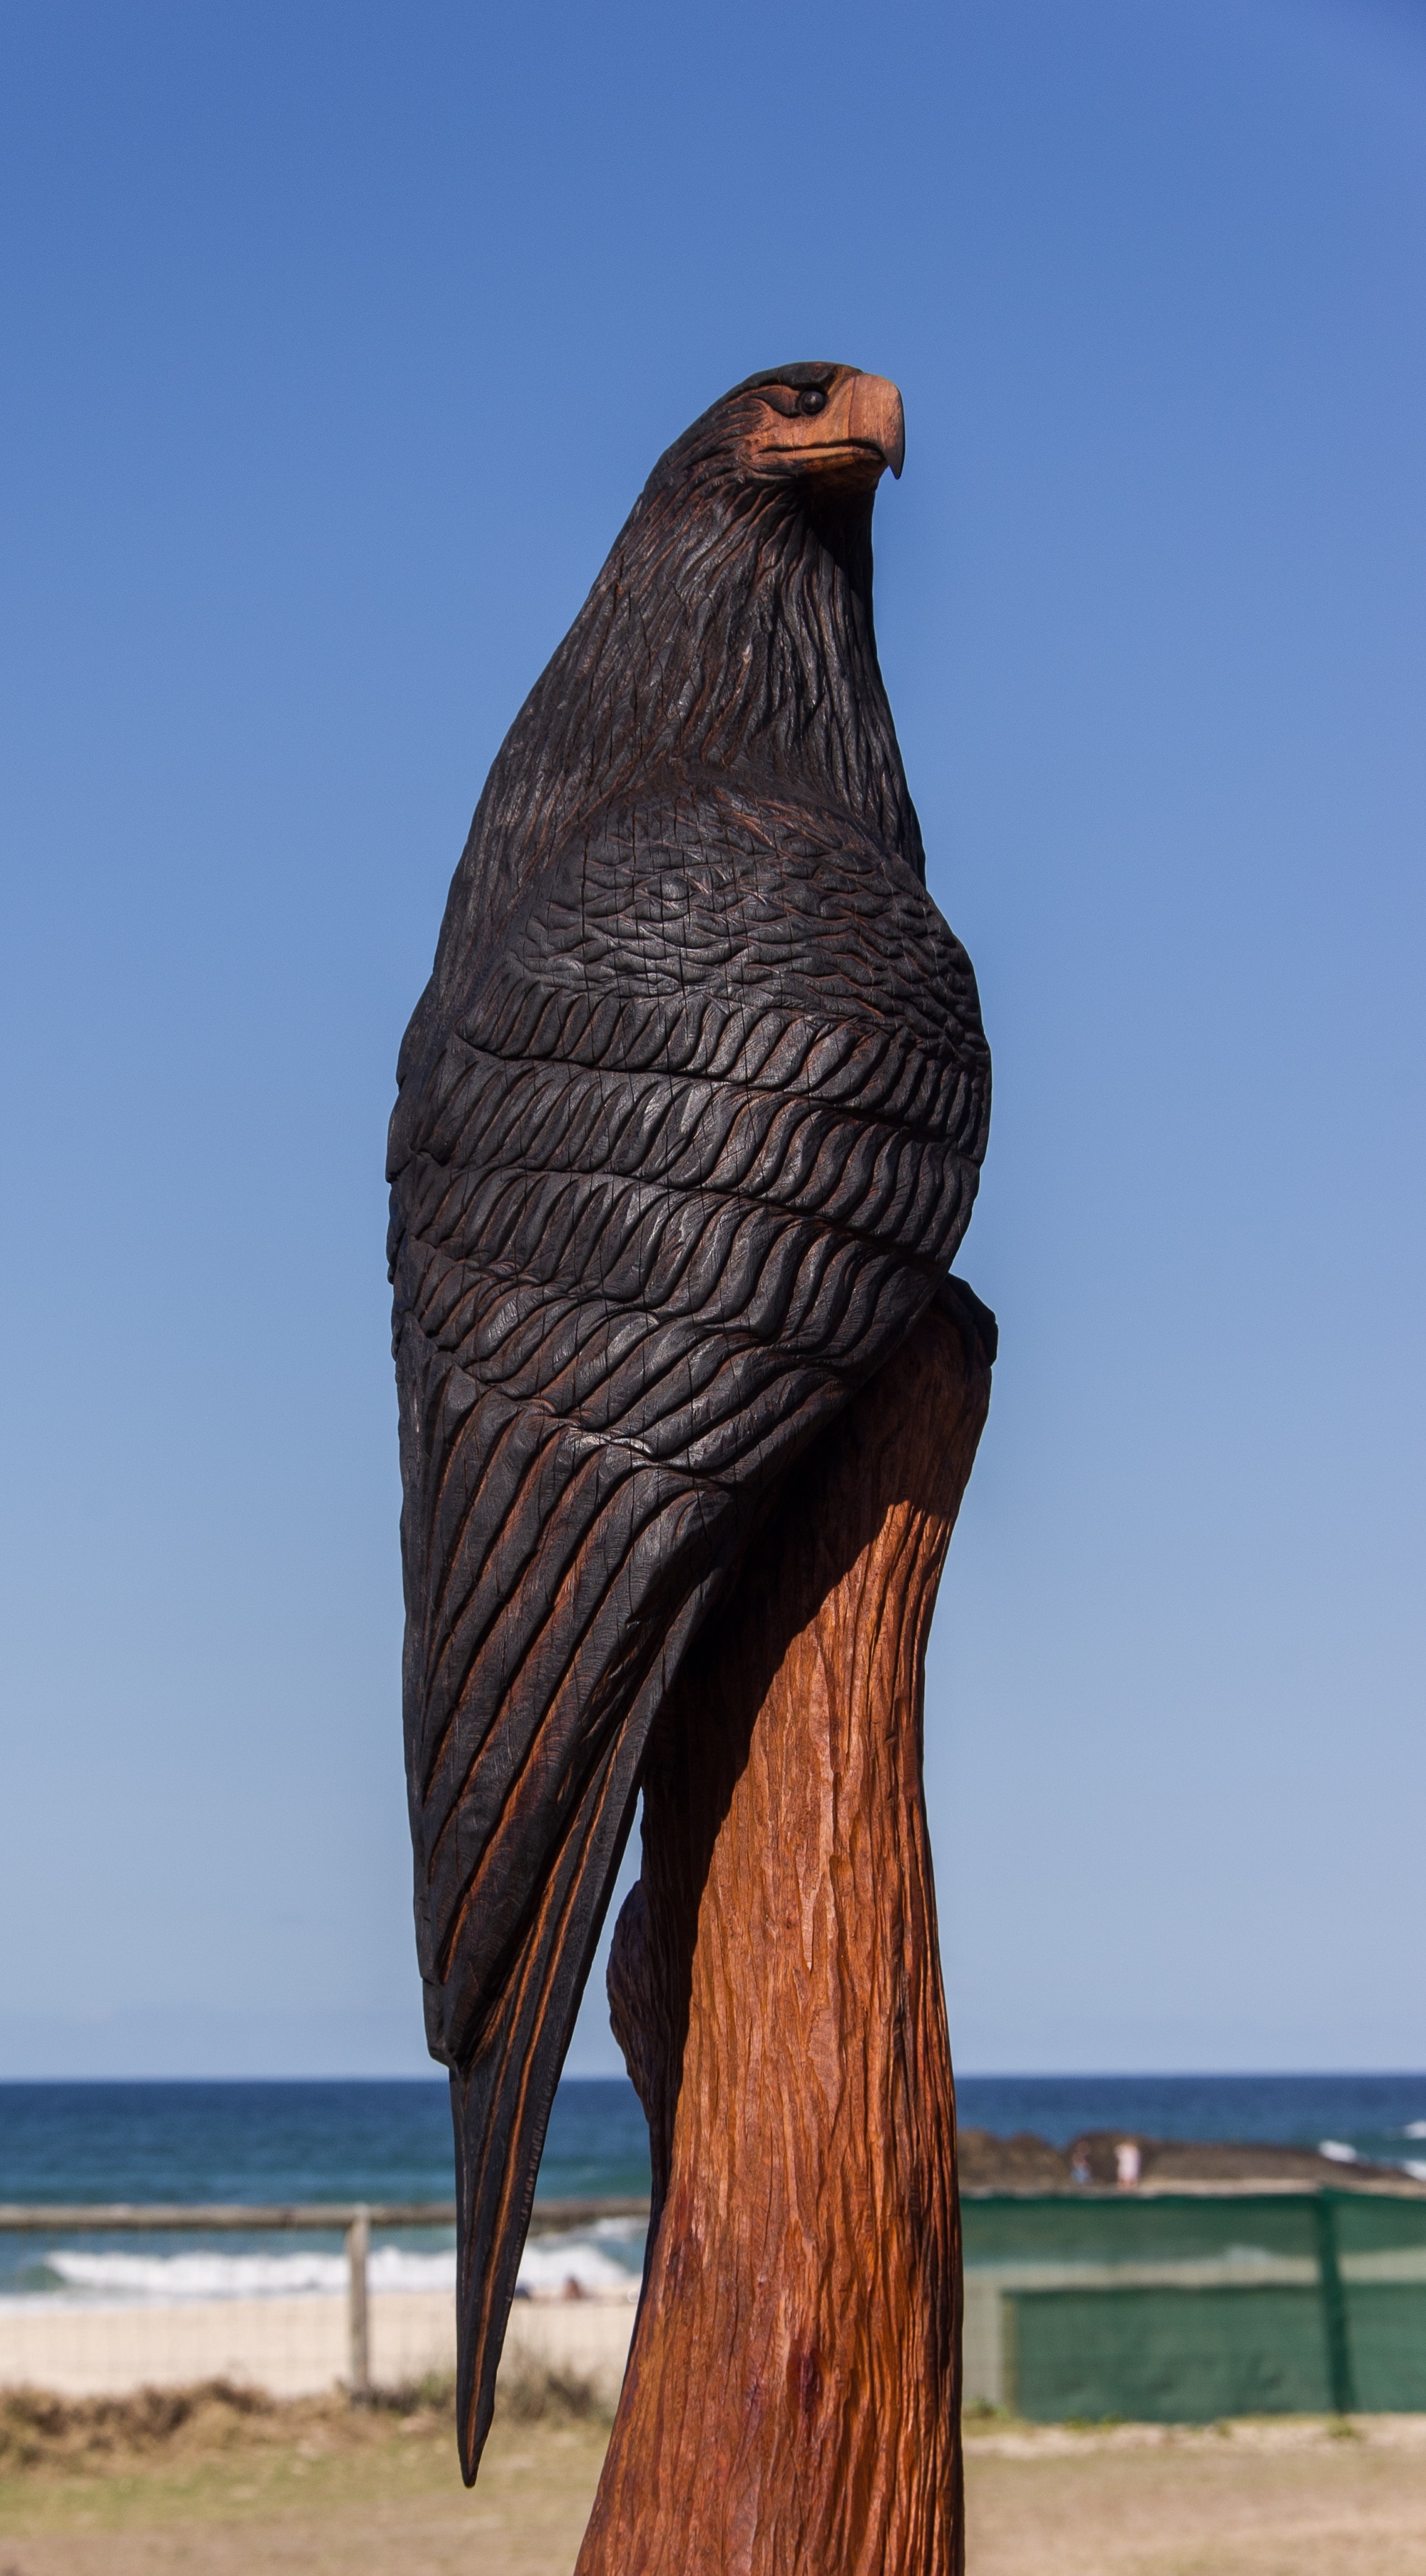 Bird, Raptor, Carving, Wood, Chainsaw, one animal, bird